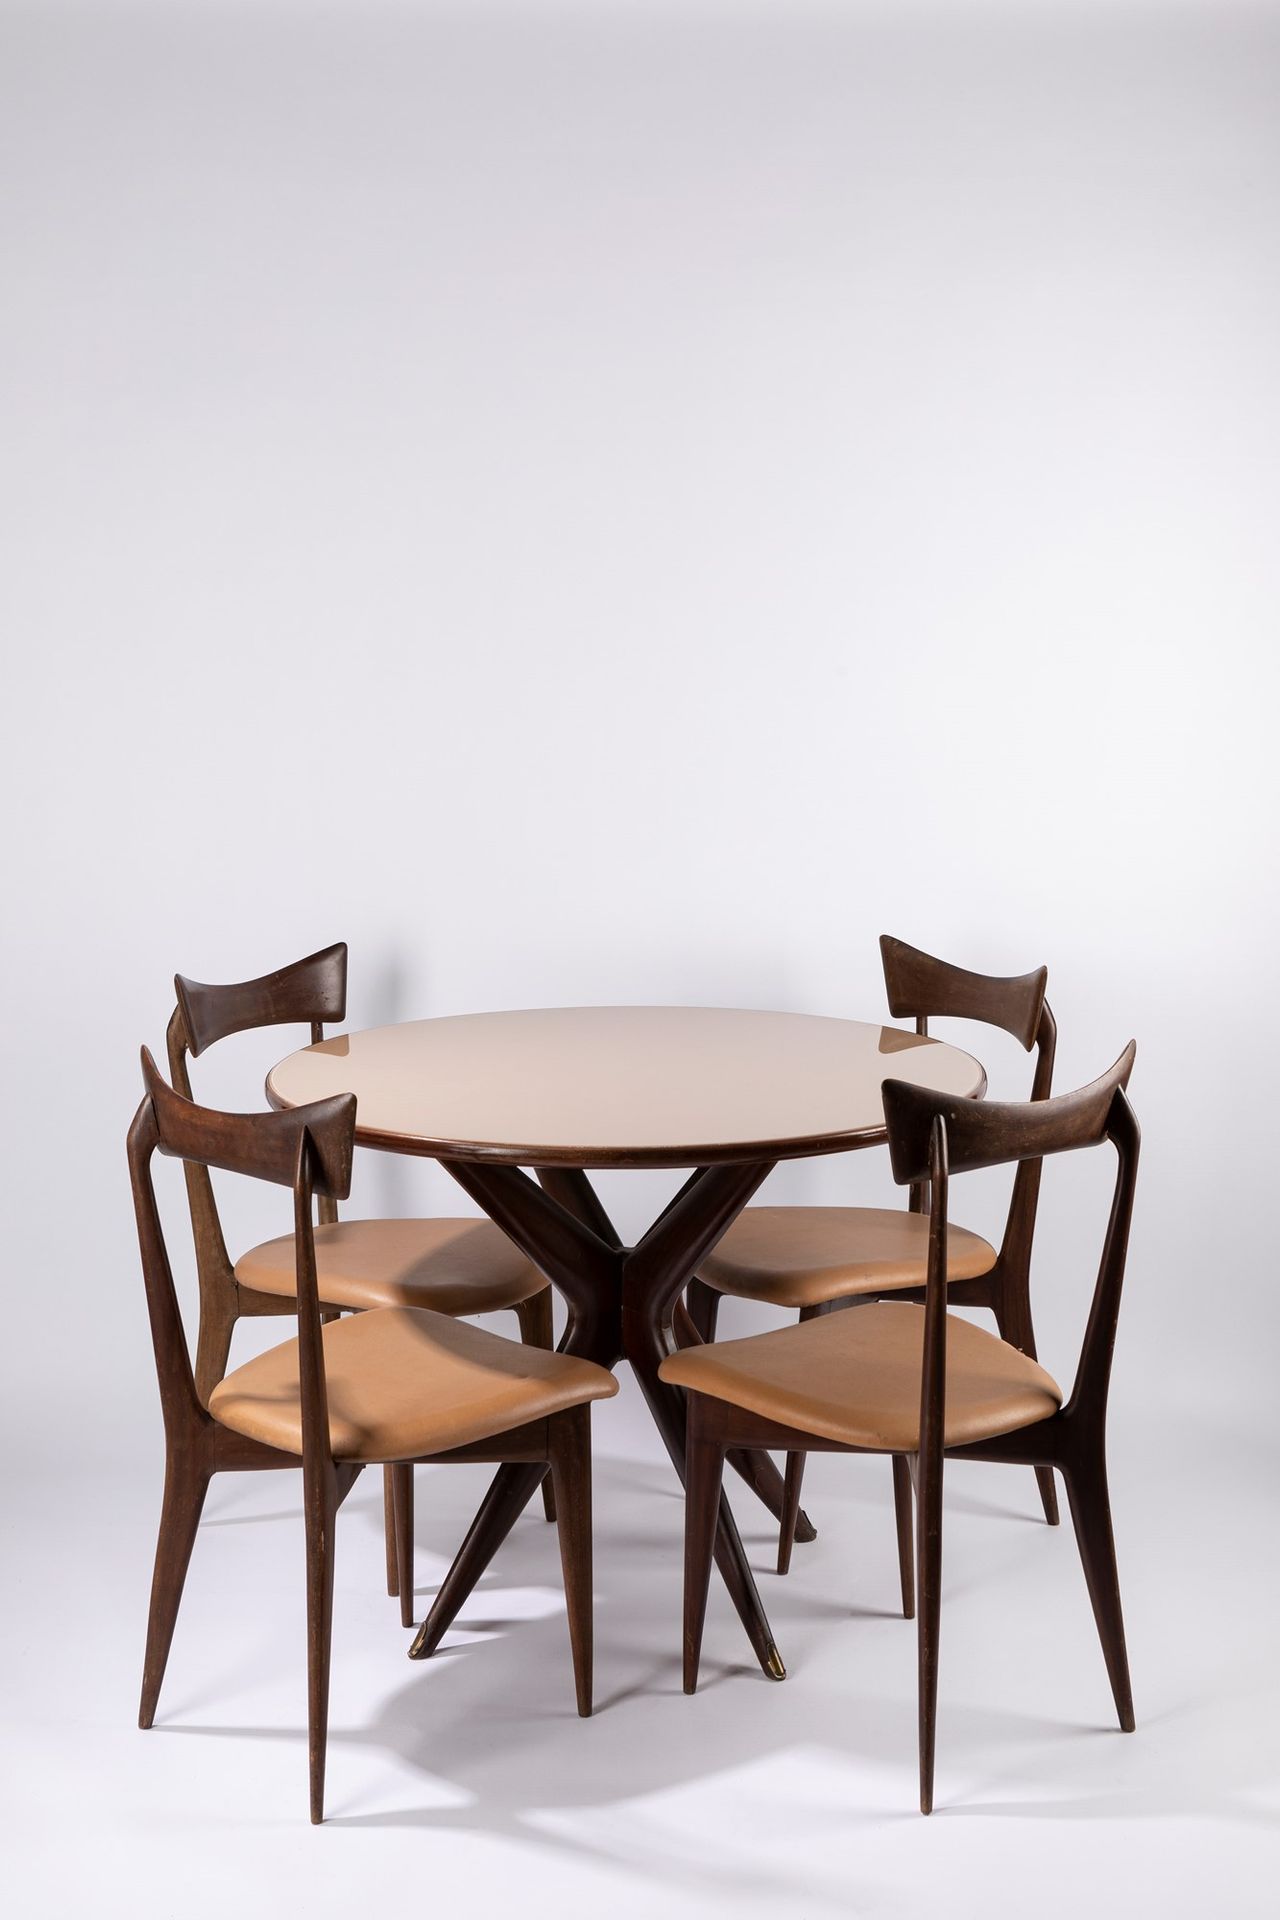 Ico & Luisa Parisi Mesa y cuatro sillas, 1950 ca.

Mesa h 78 x diam 100 cm - sil&hellip;